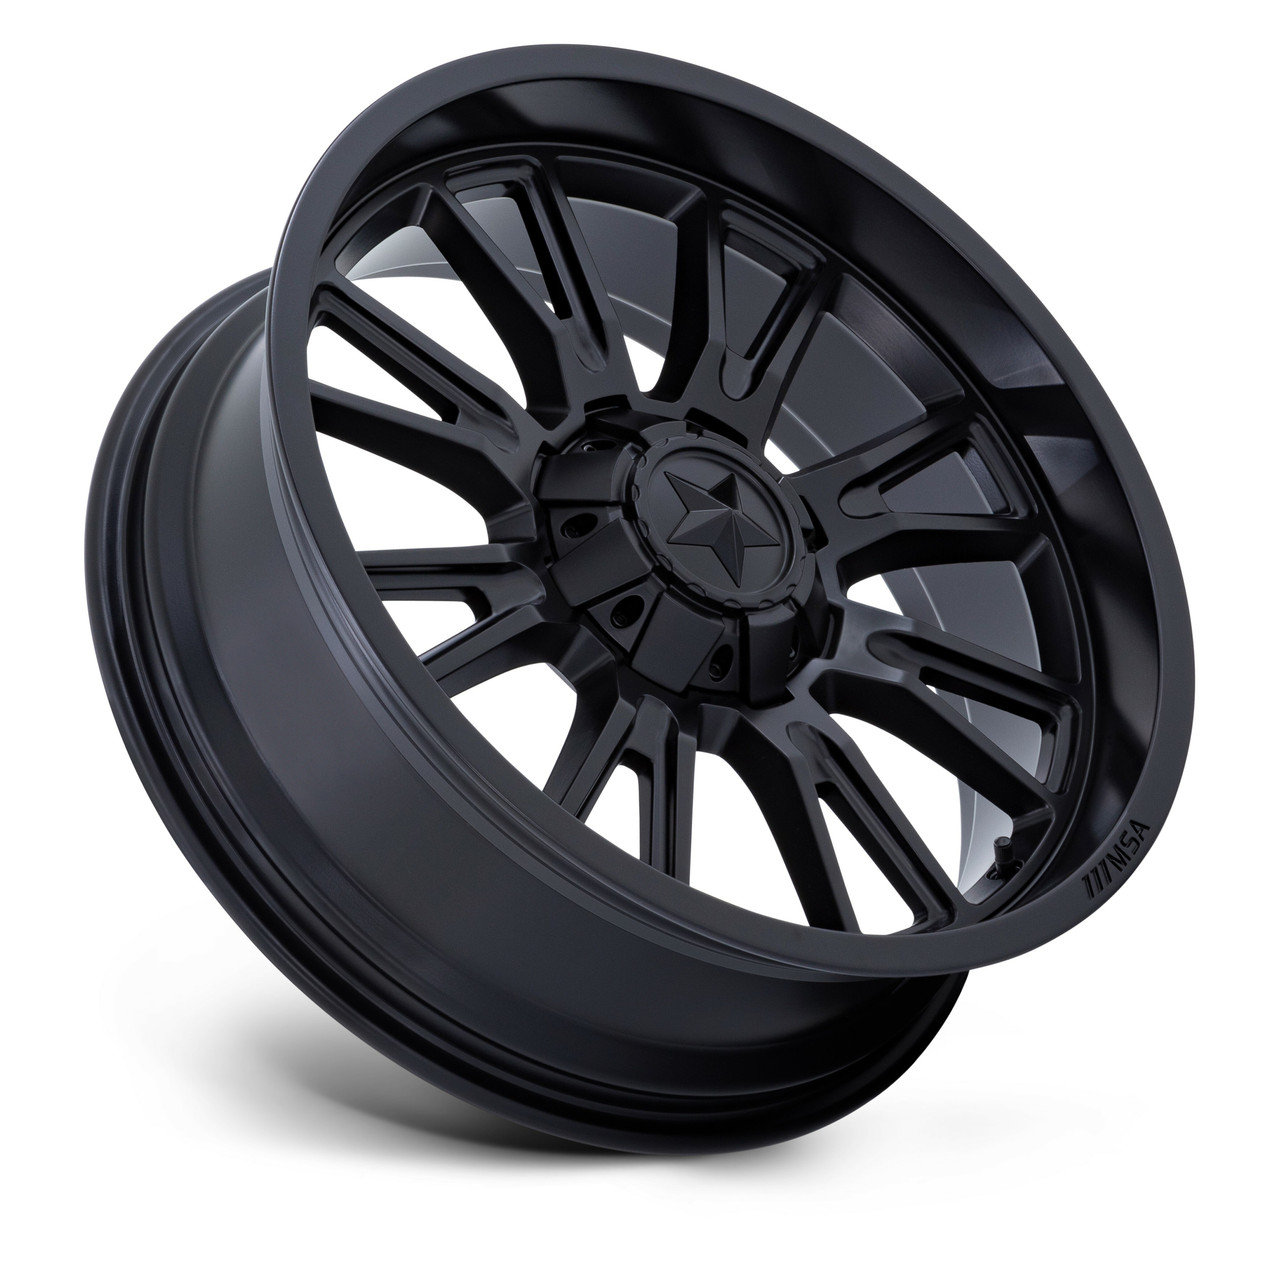 15" MSA Offroad Wheels M51 Thunderlips Matte Black 15x7 Wheel 5x4.5 10mm Rim